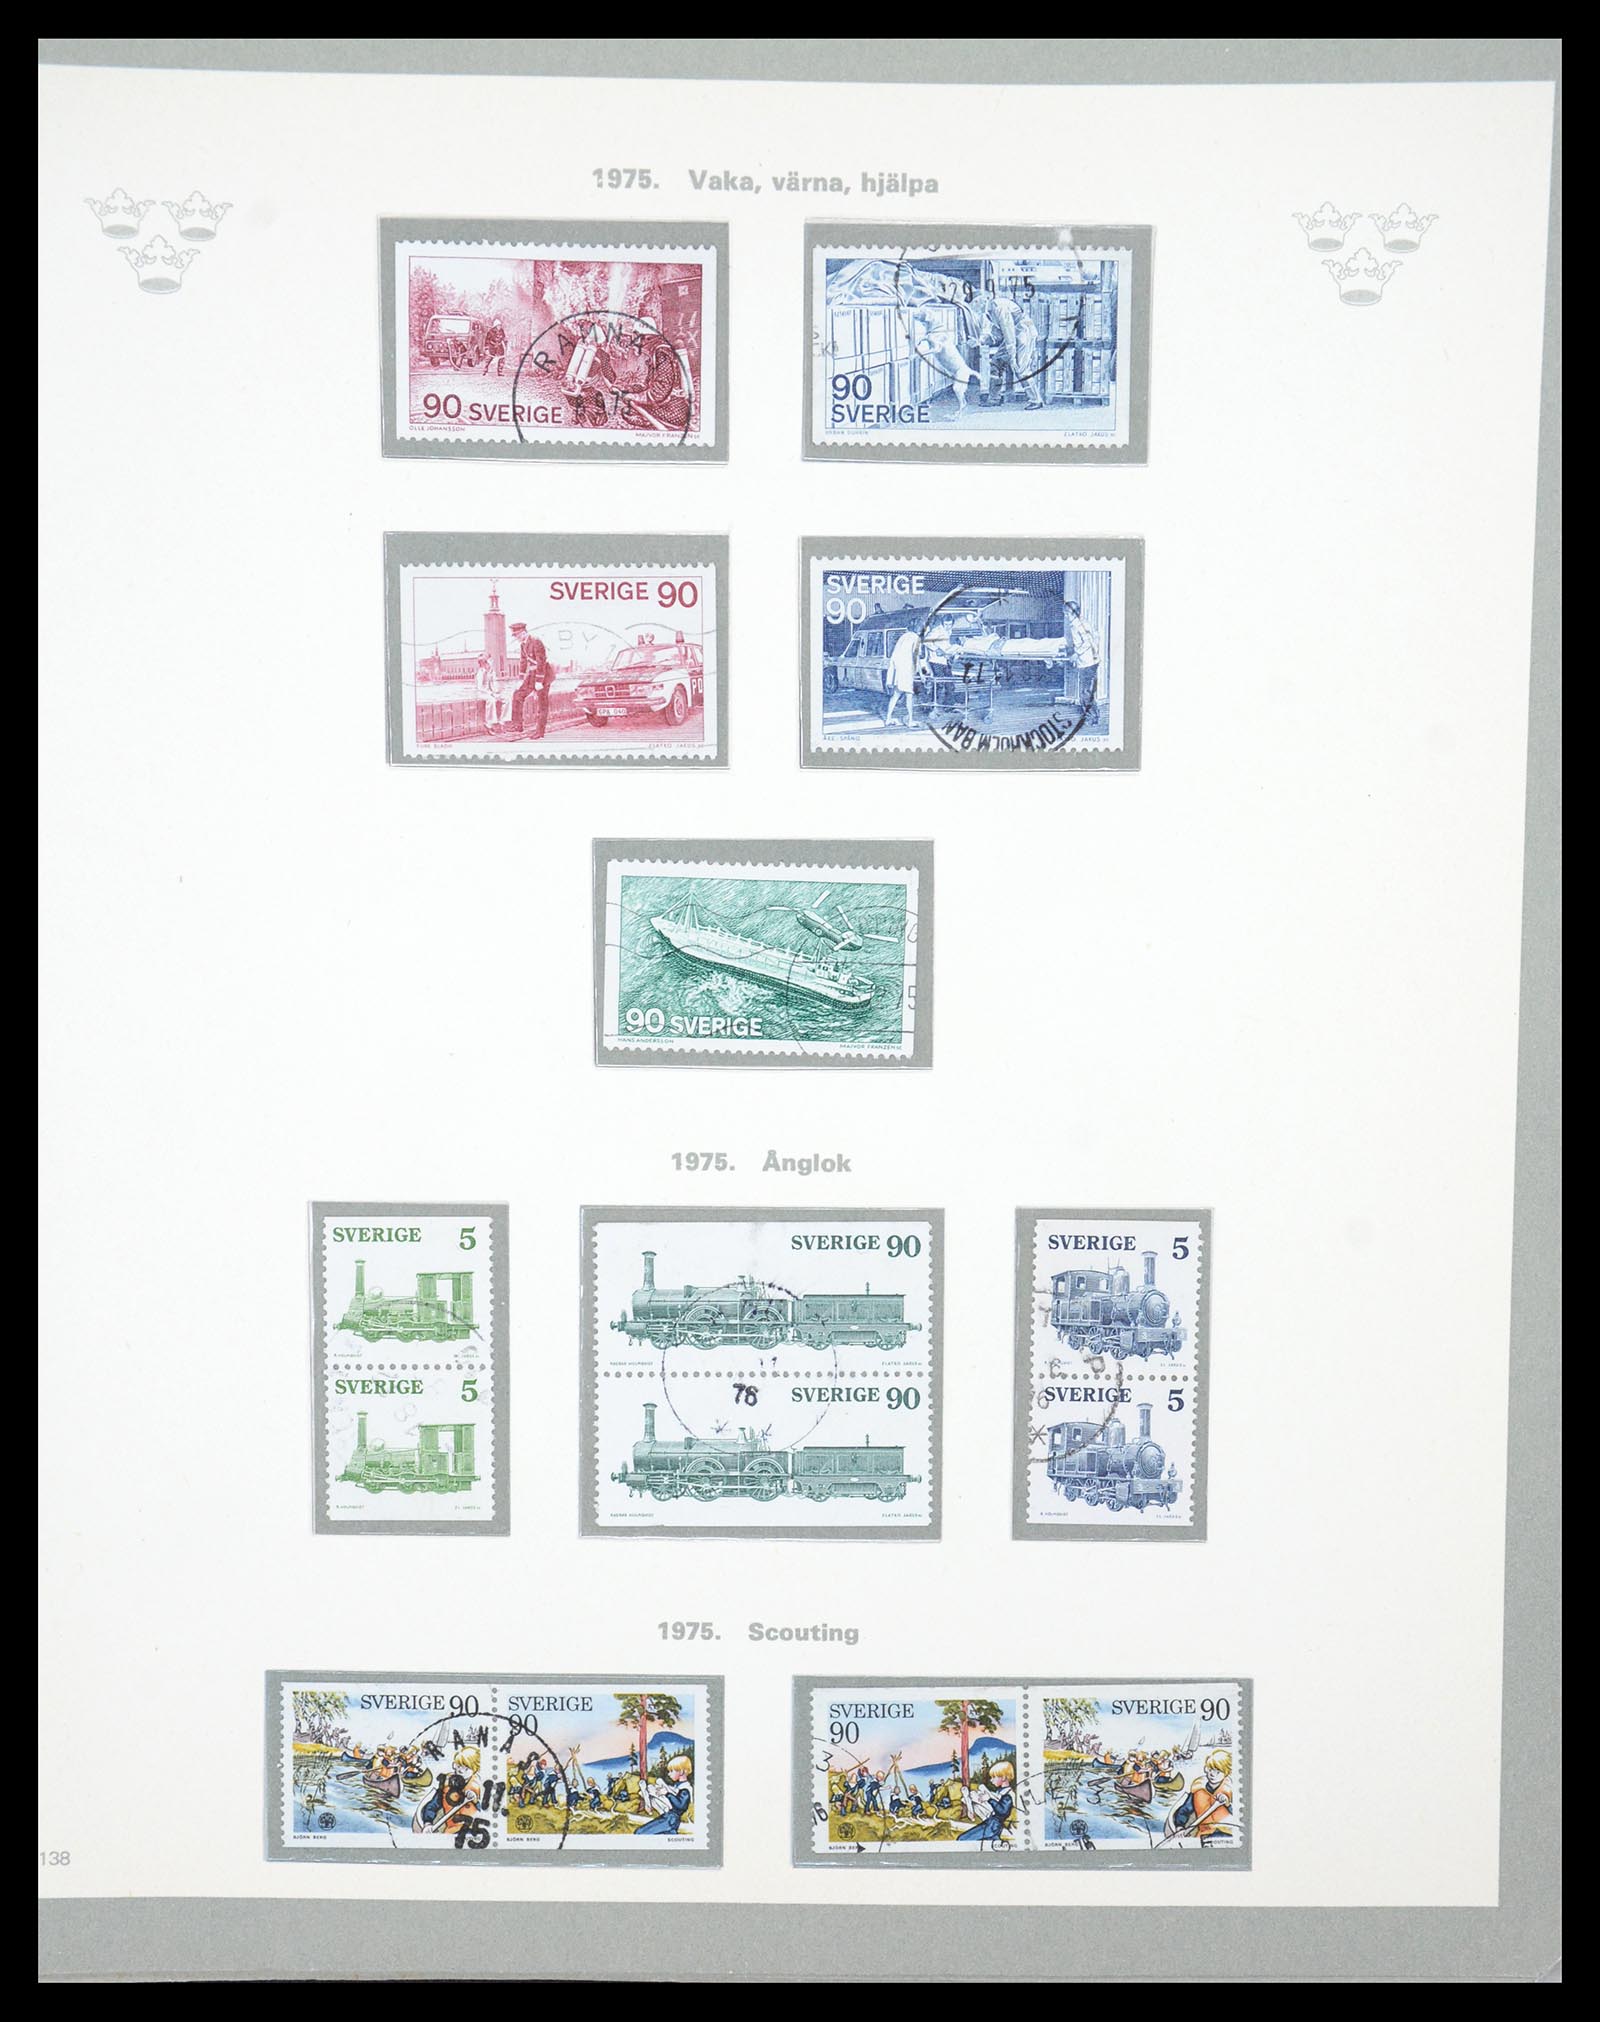 36579 110 - Stamp collection 36579 Zweden complete verzameling 1855-1975.